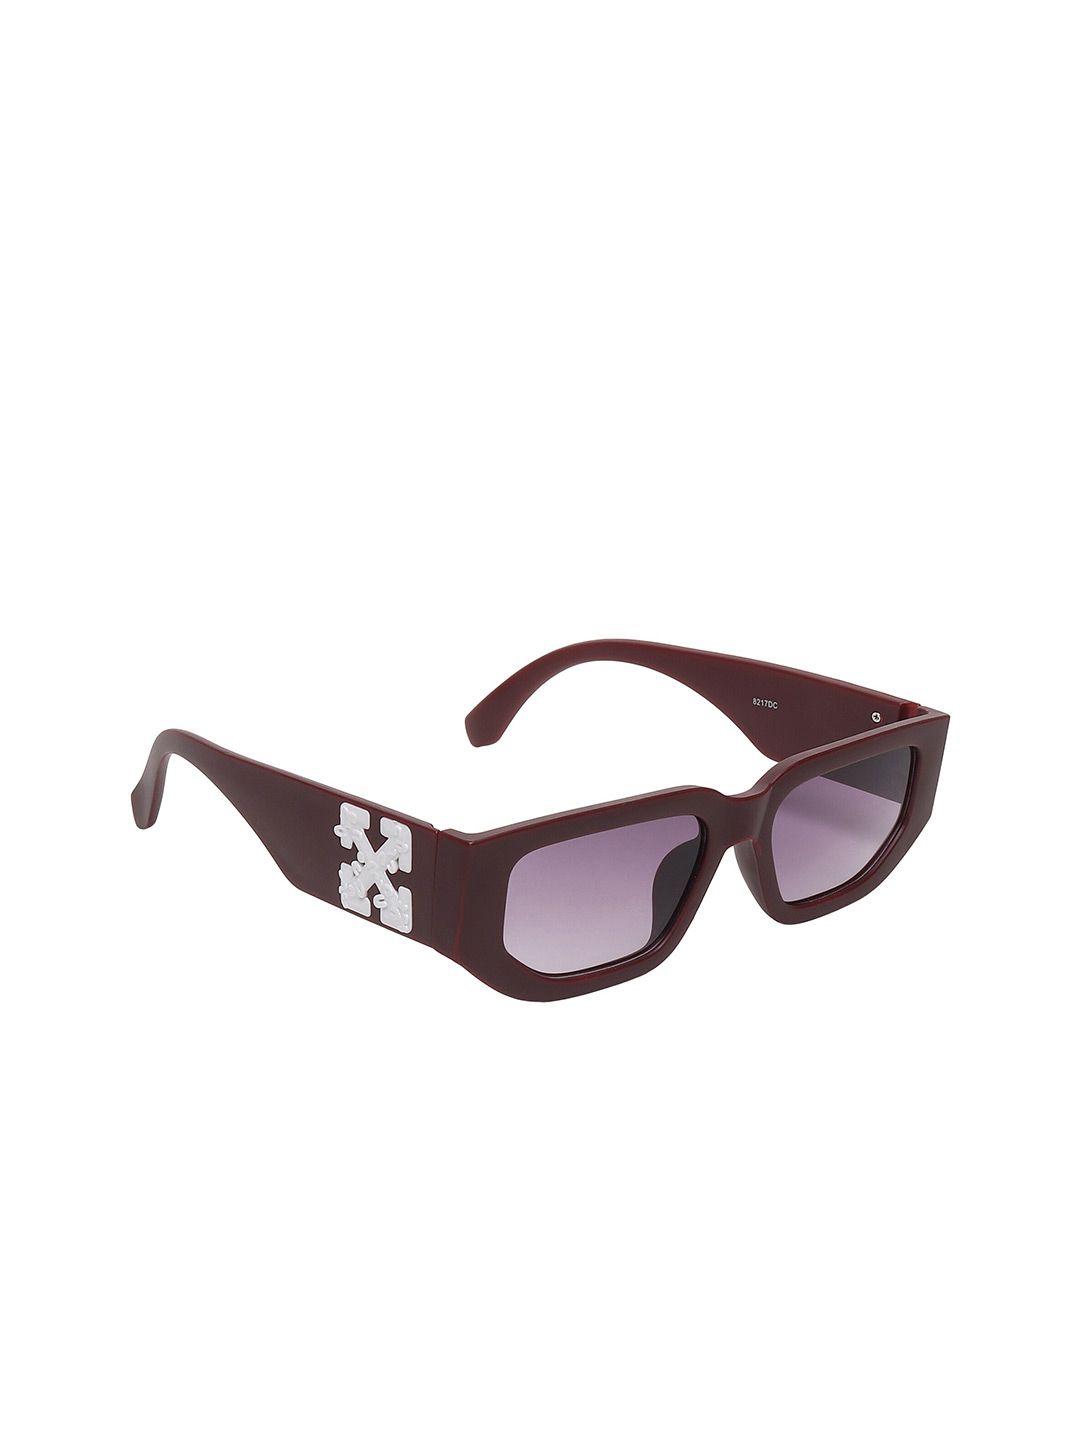 swiss design unisex square sunglasses with uv protected lens